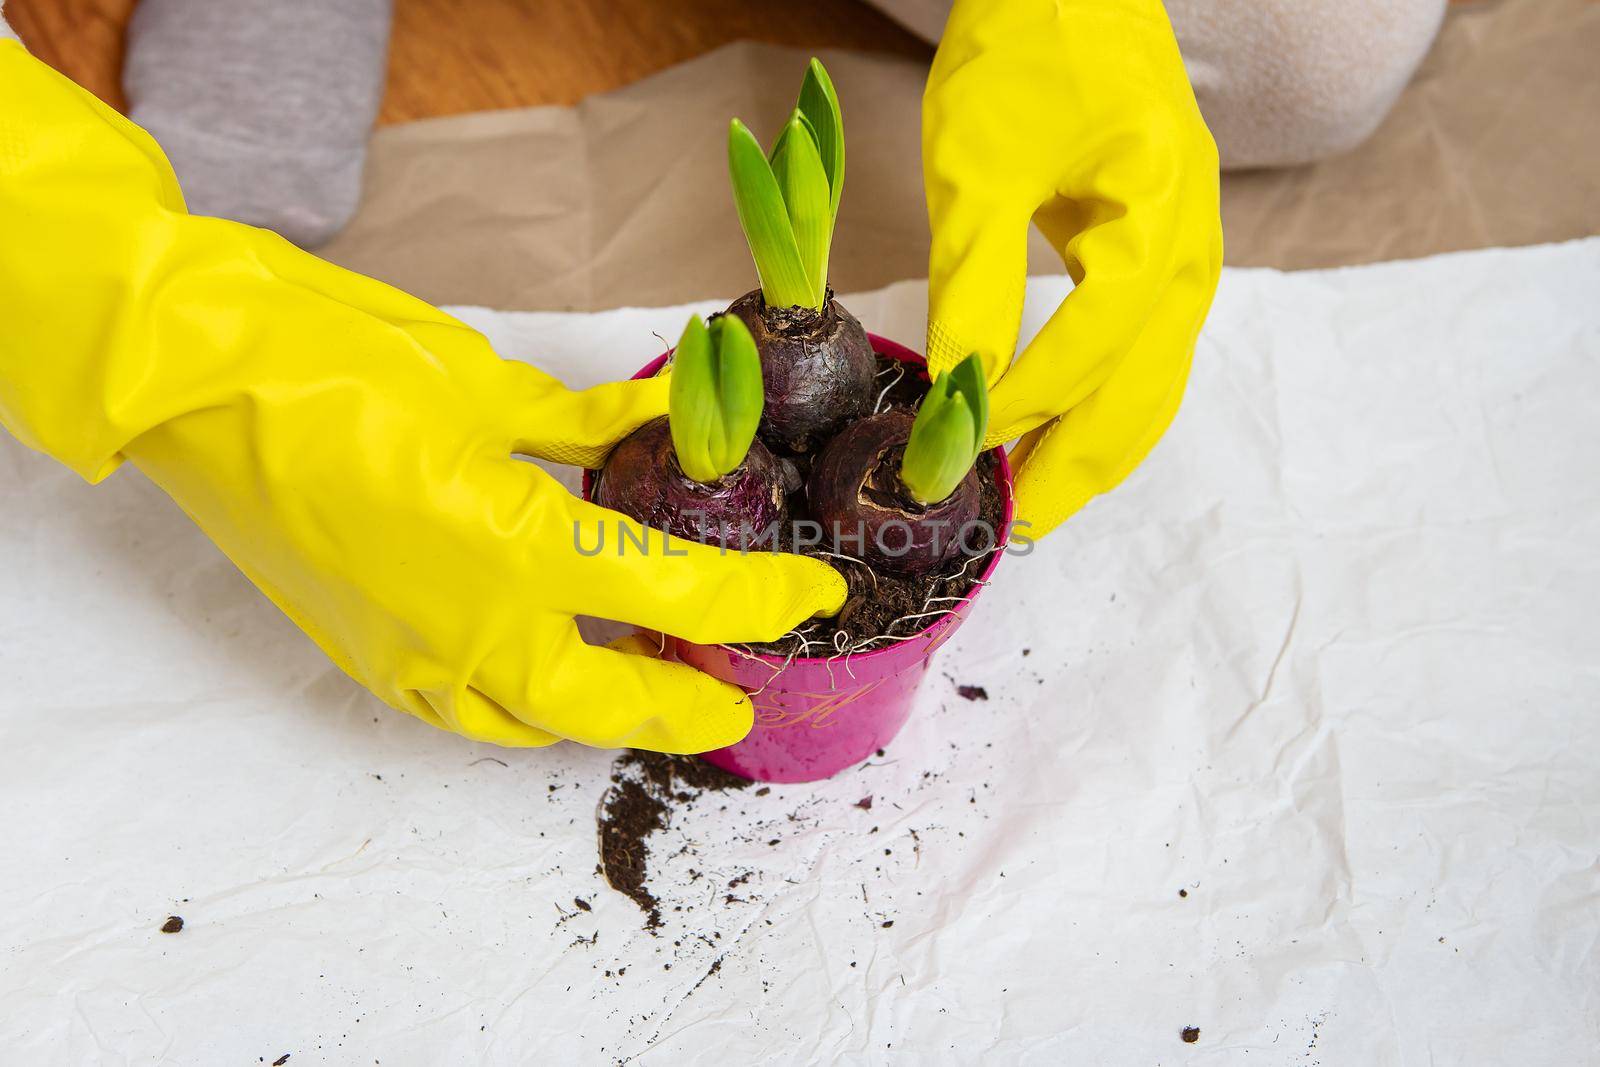 Transplanting hyacinths from a pot, planting hyacinth bulbs, gardening equipment for transplanting, gloves, scissors. by sfinks